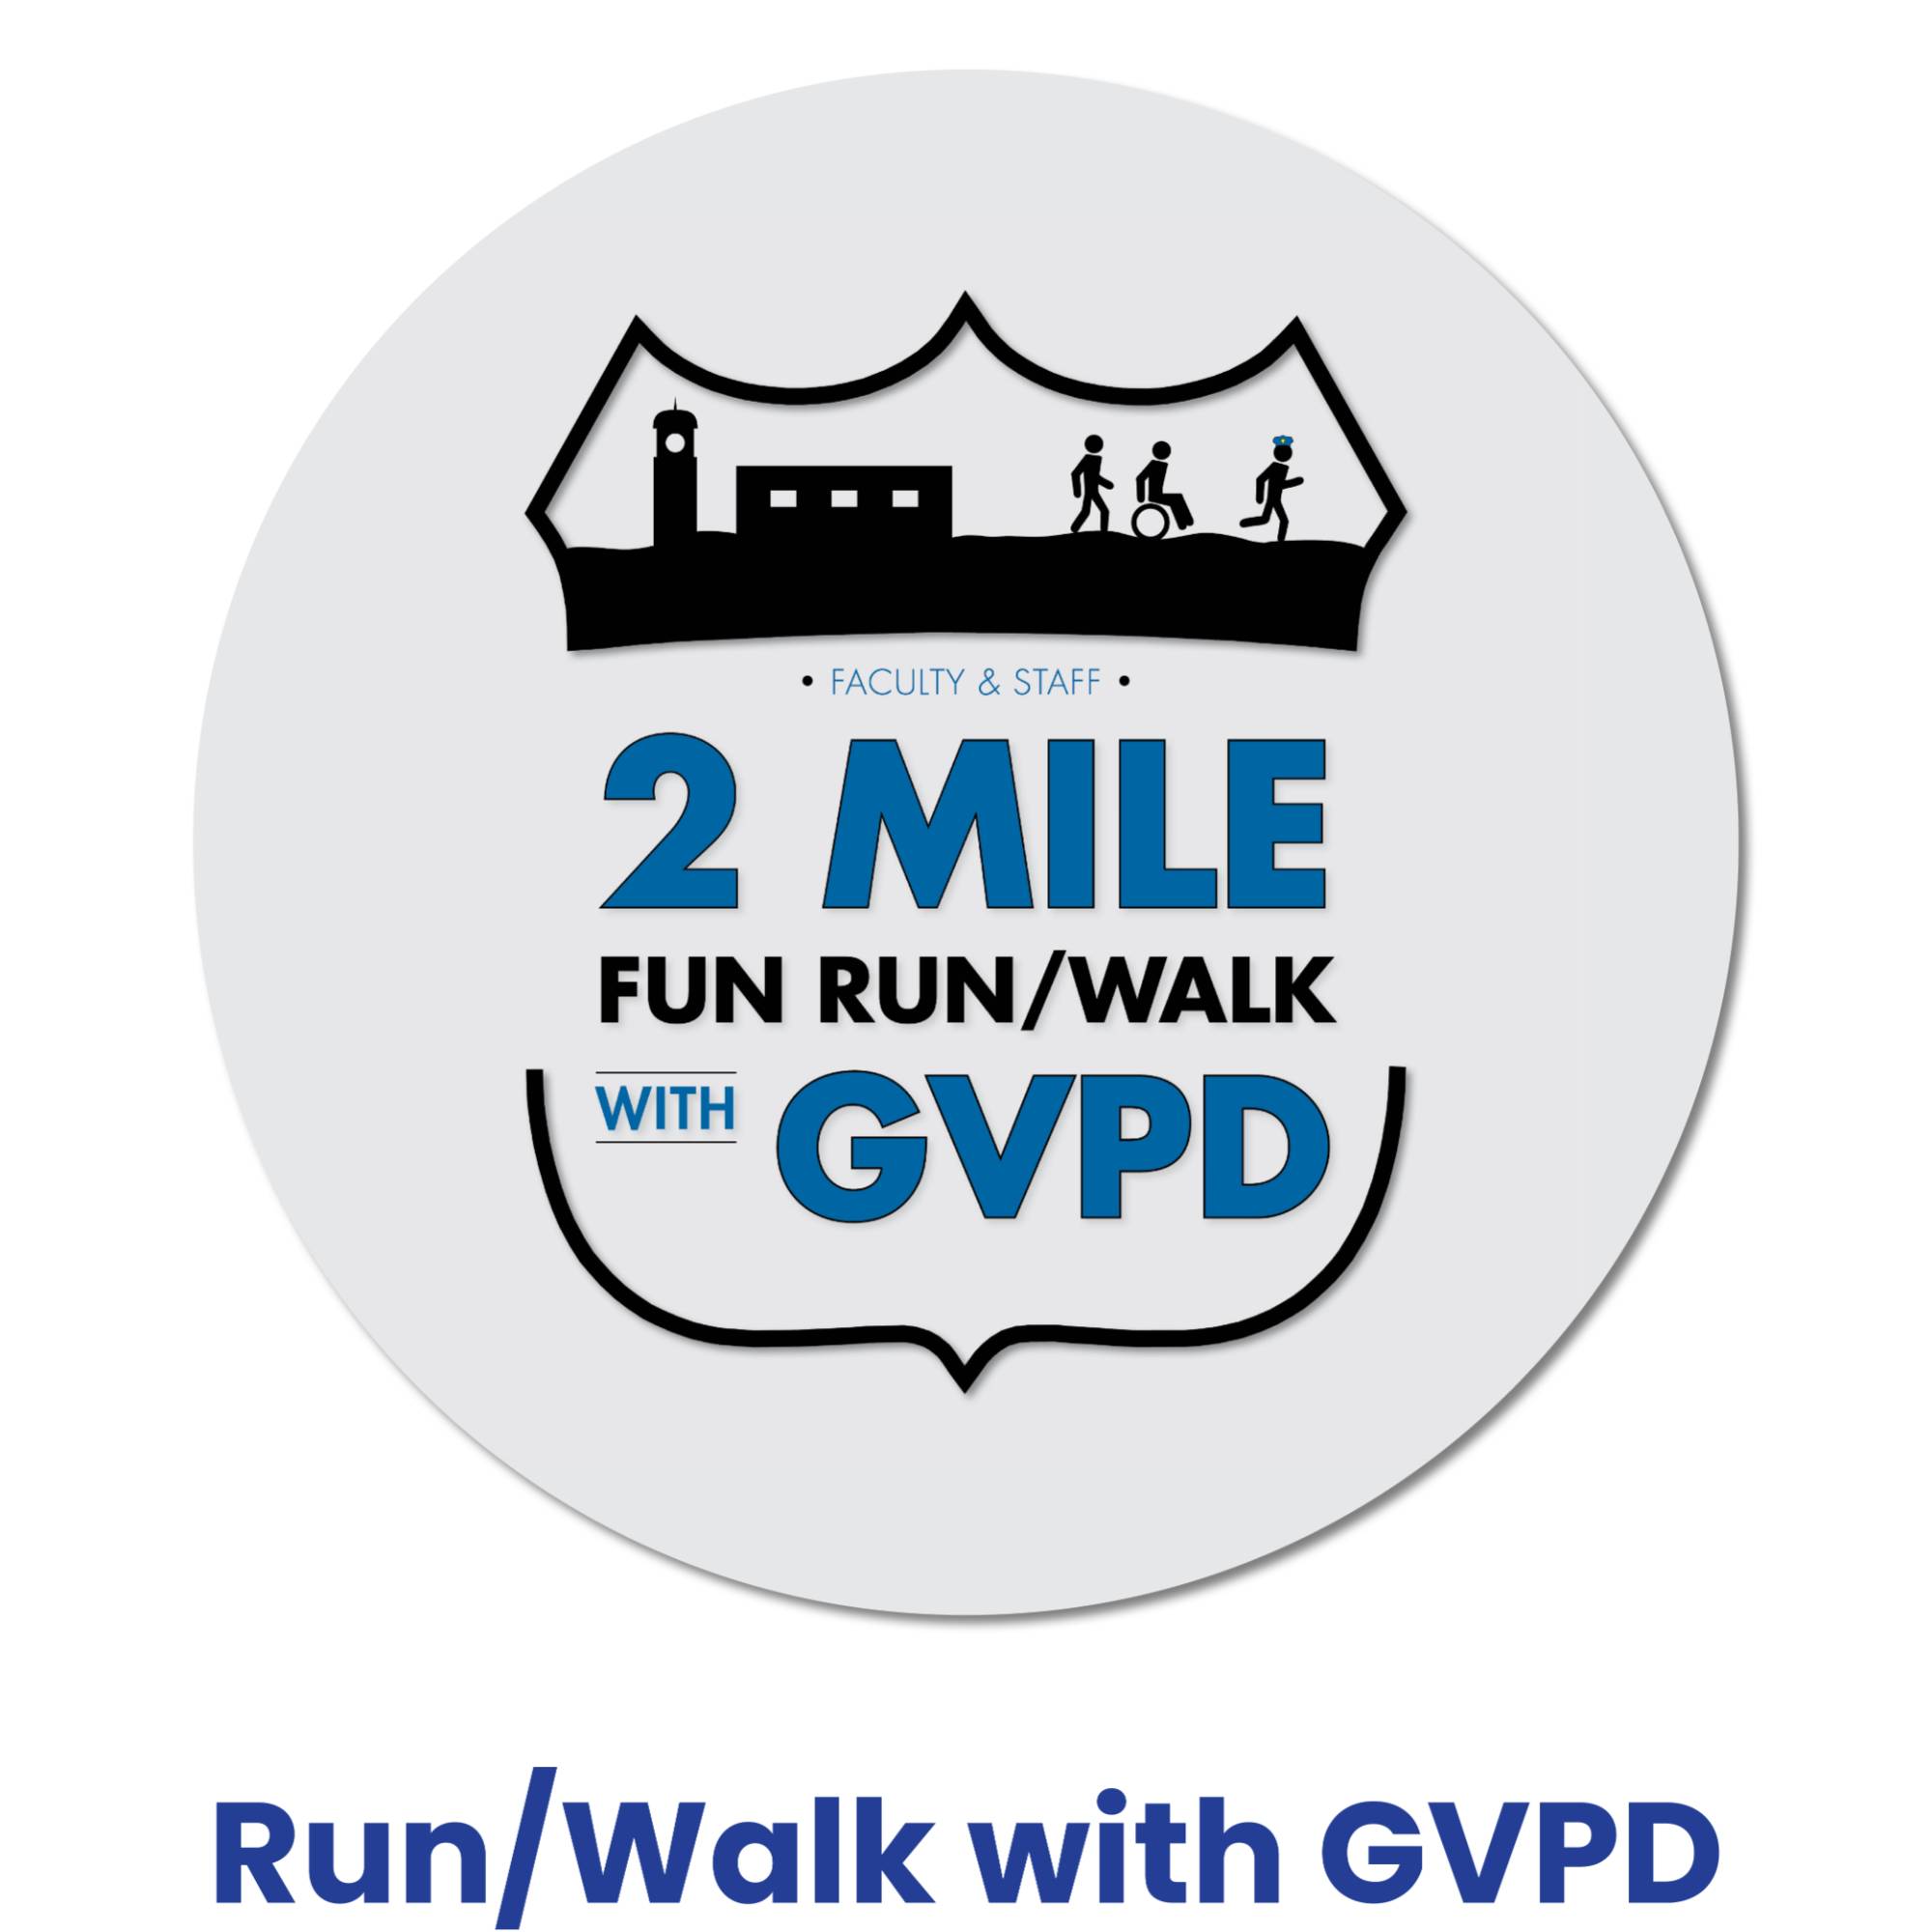 Faculty & Staff 2 Mile Fun Run/Walk with GVPD logo